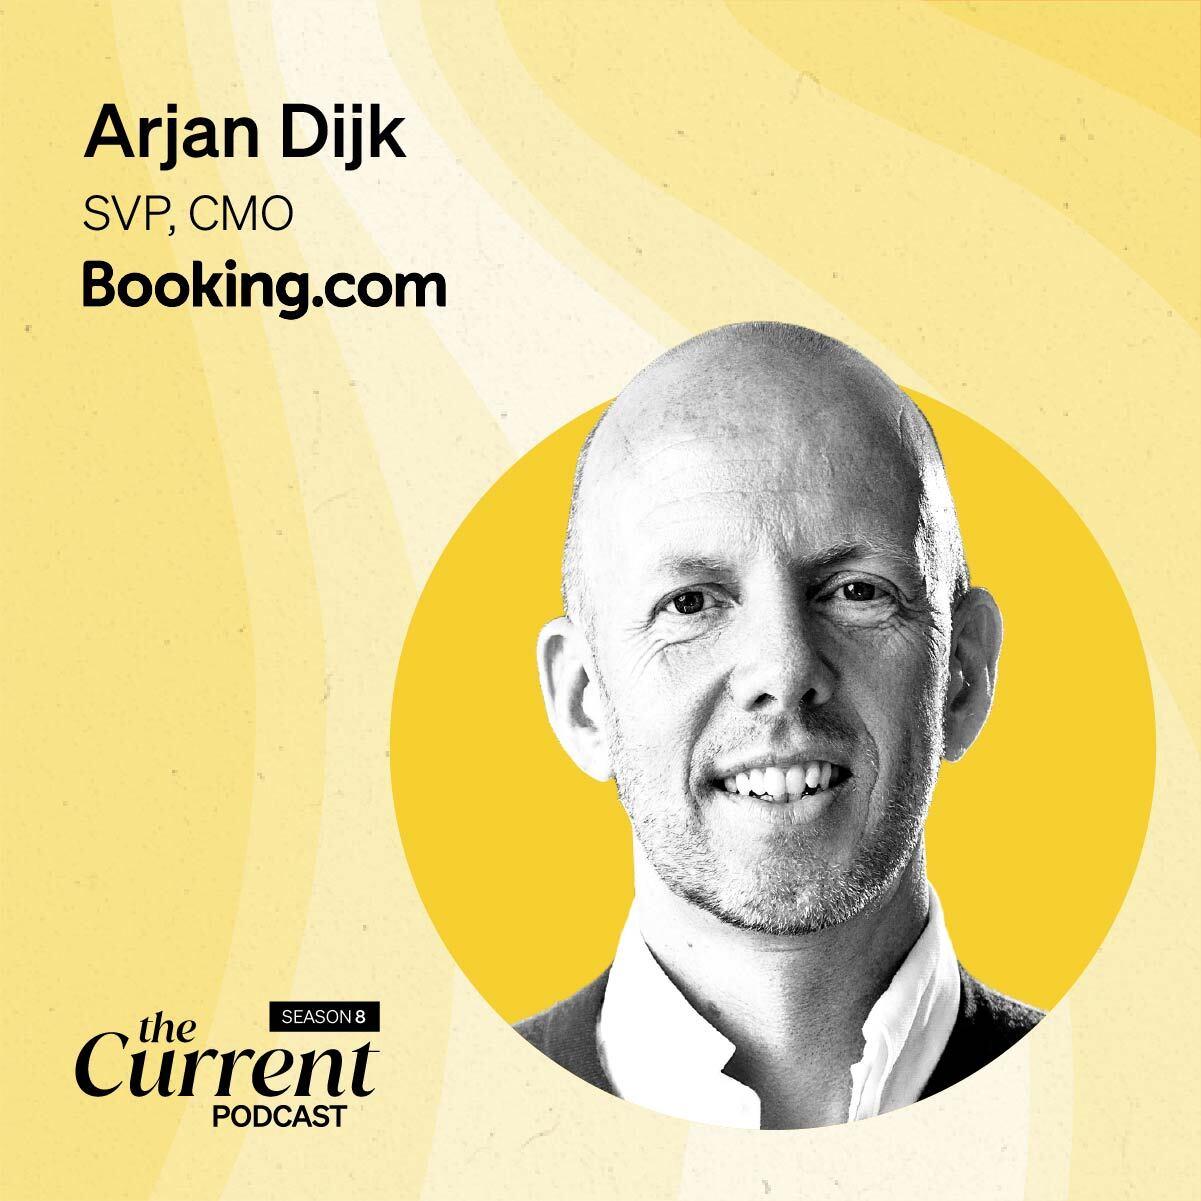 The Current Podcast, Season 8: Arjan Dijk, CMO, Booking.com